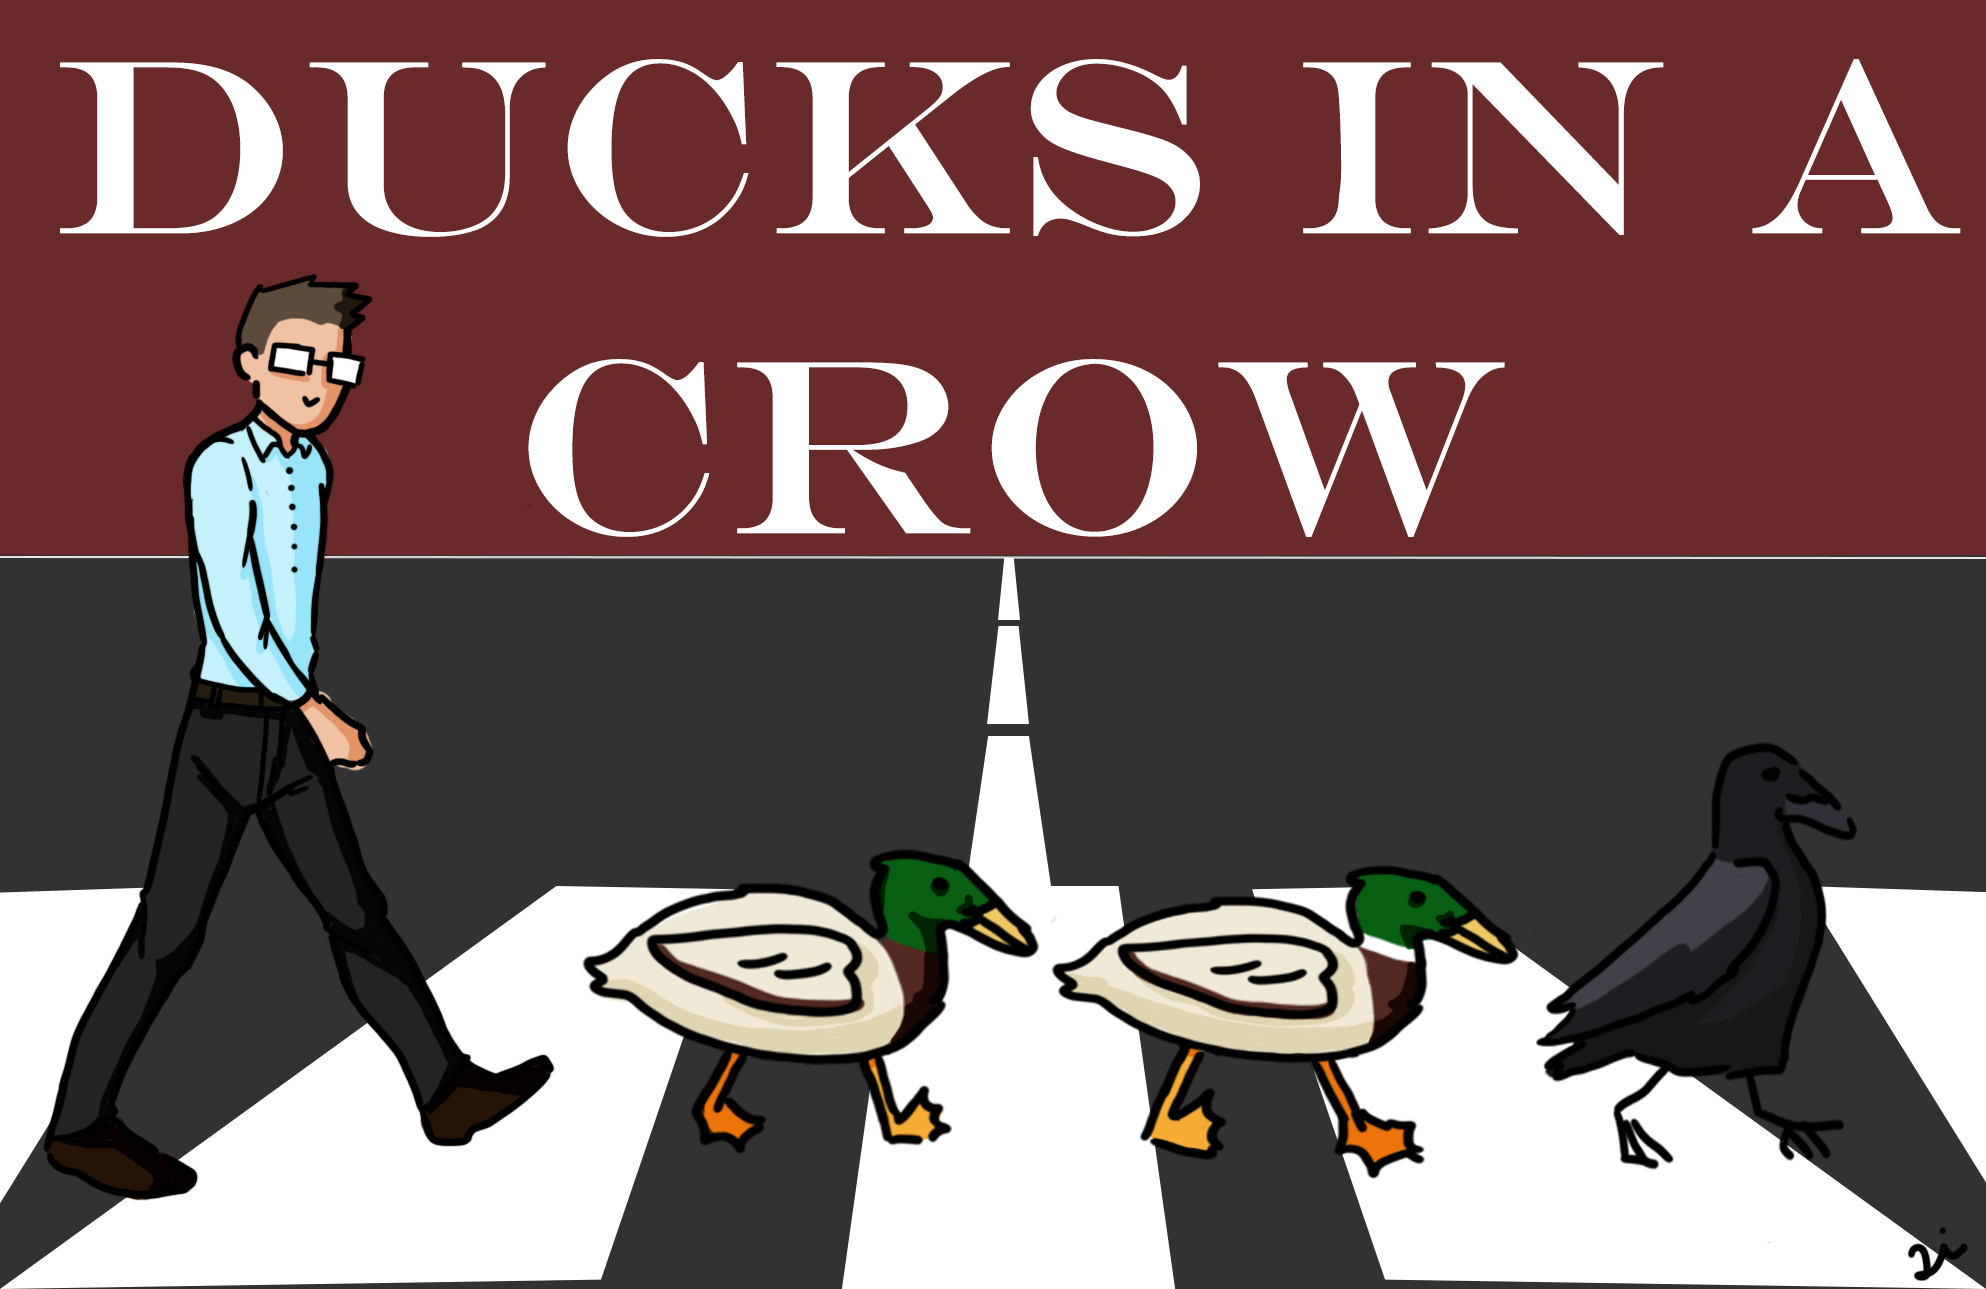 Cartoonist Lillian Li visually depicts math teacher Wayne Powers' popular joke "get all of your ducks in a crow."